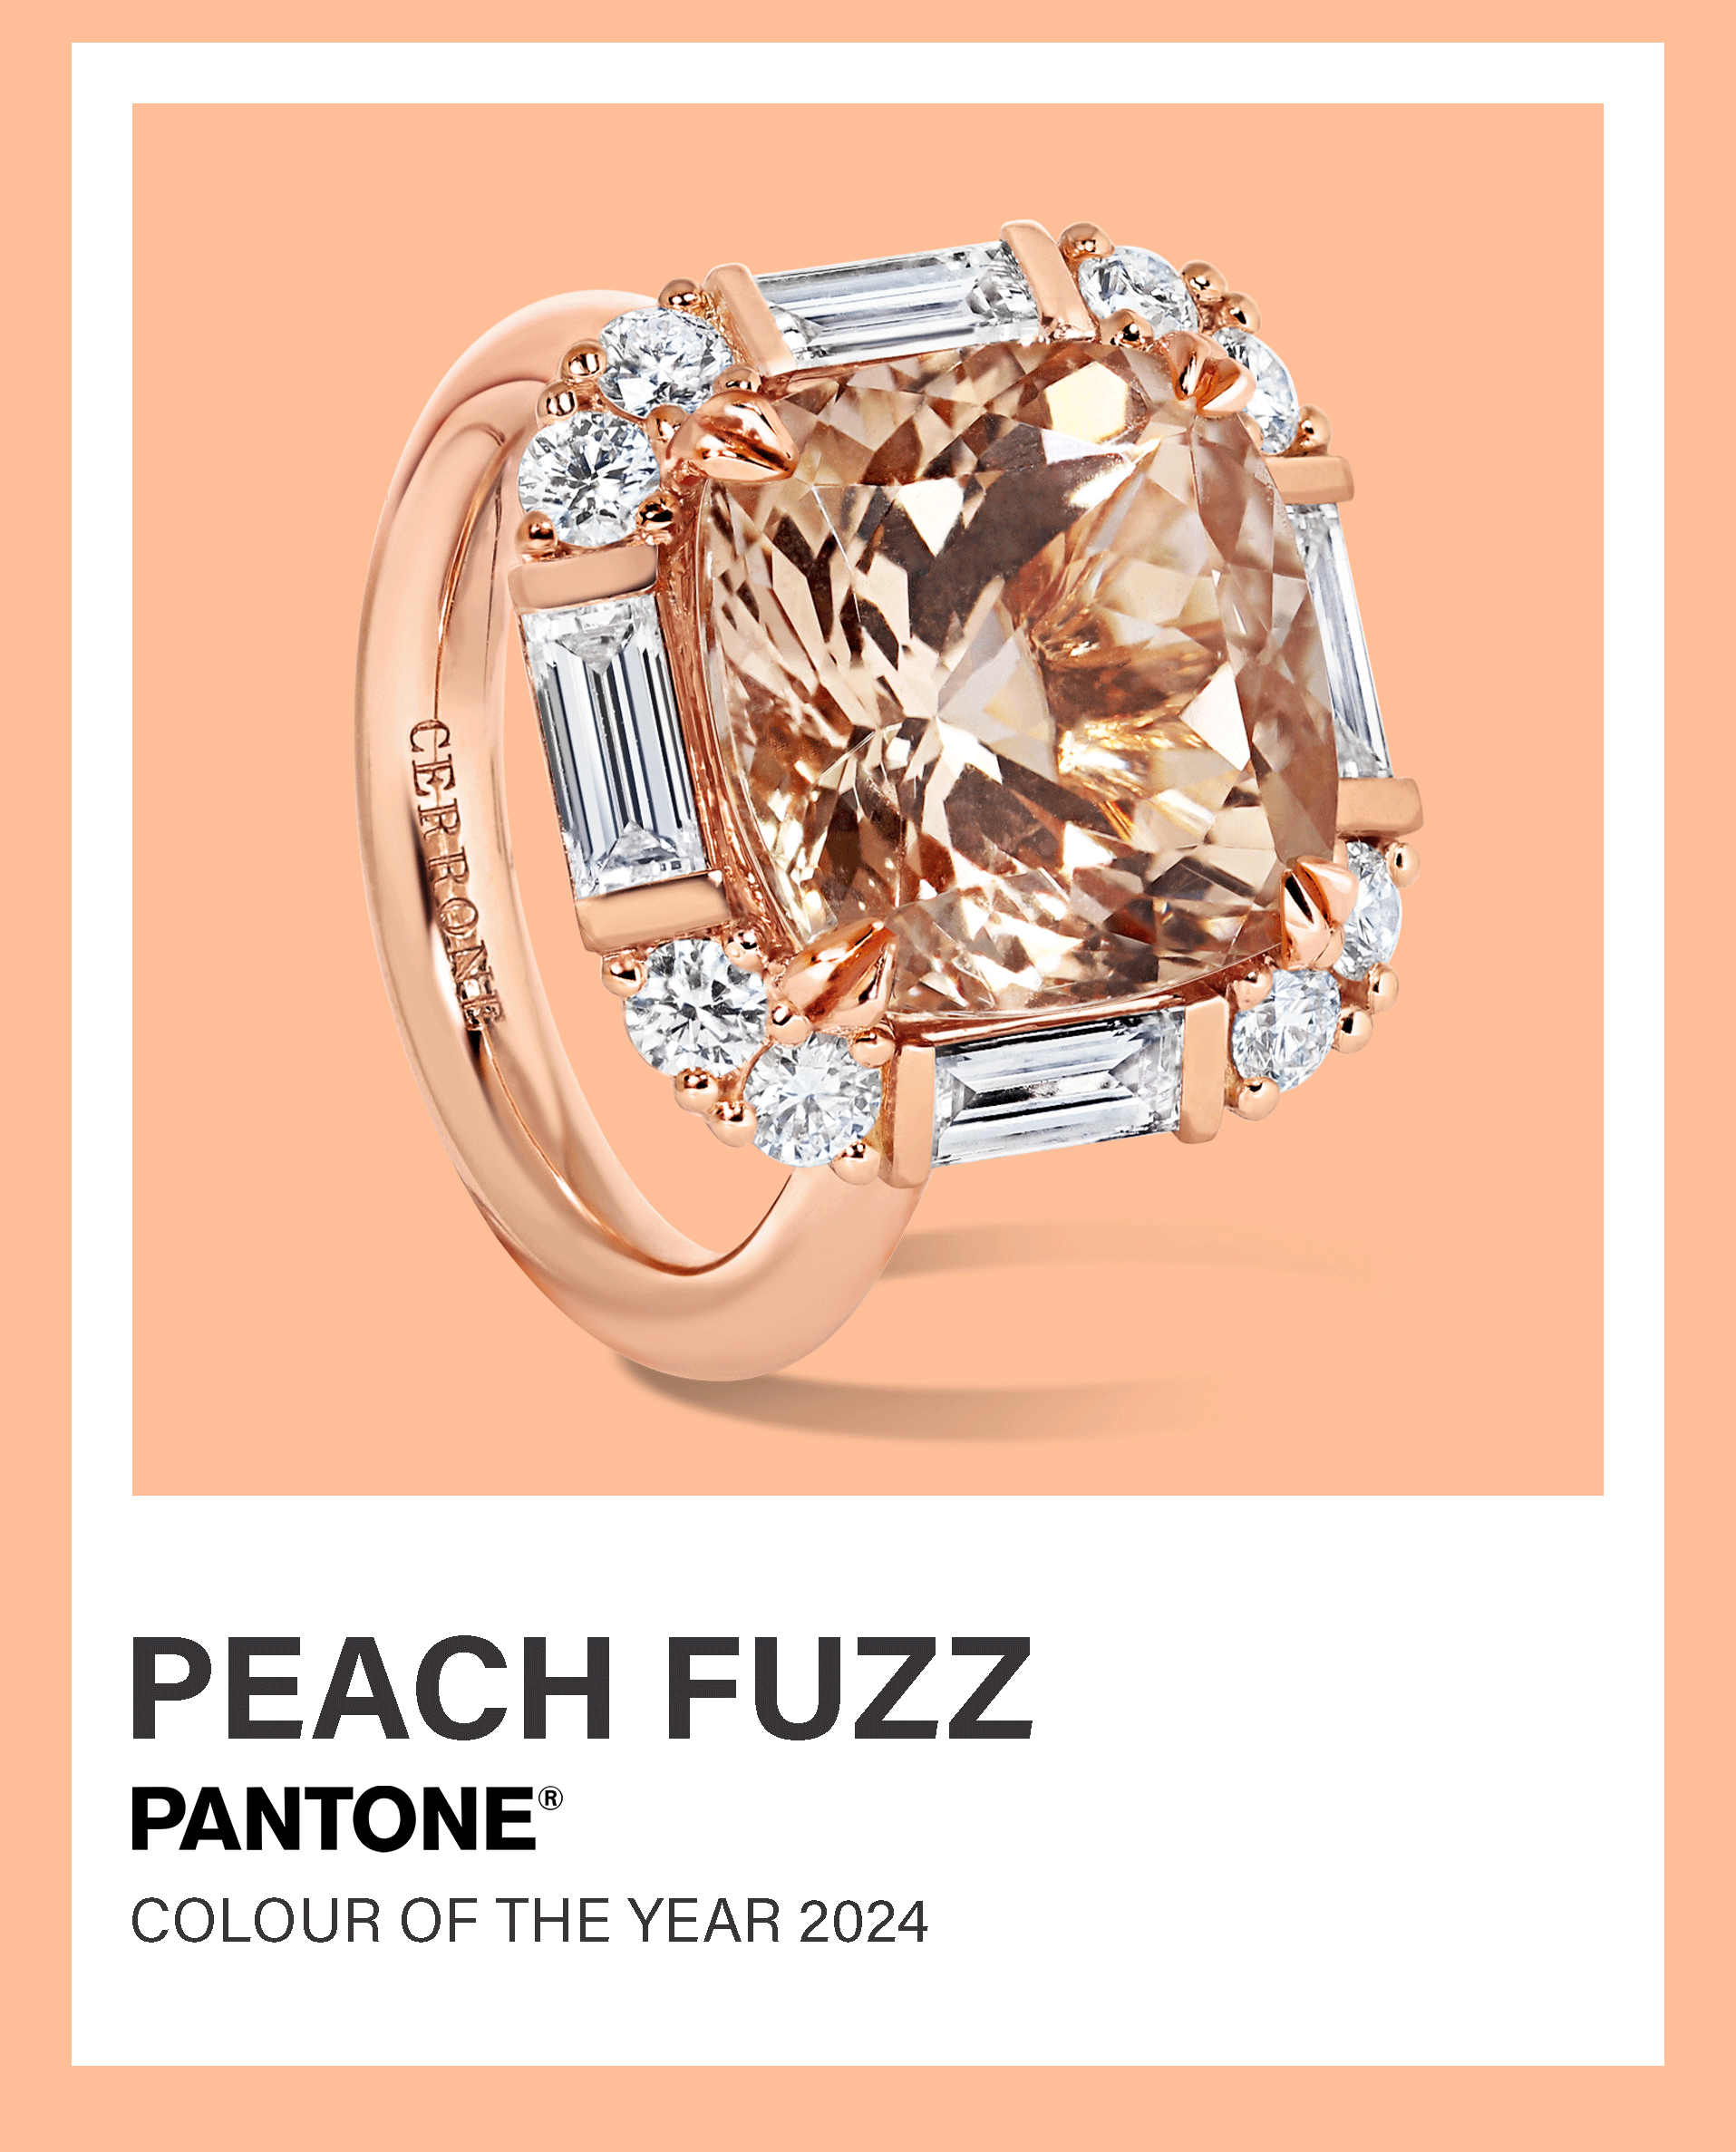 Colour of the year 2024 - Peach Fuzz